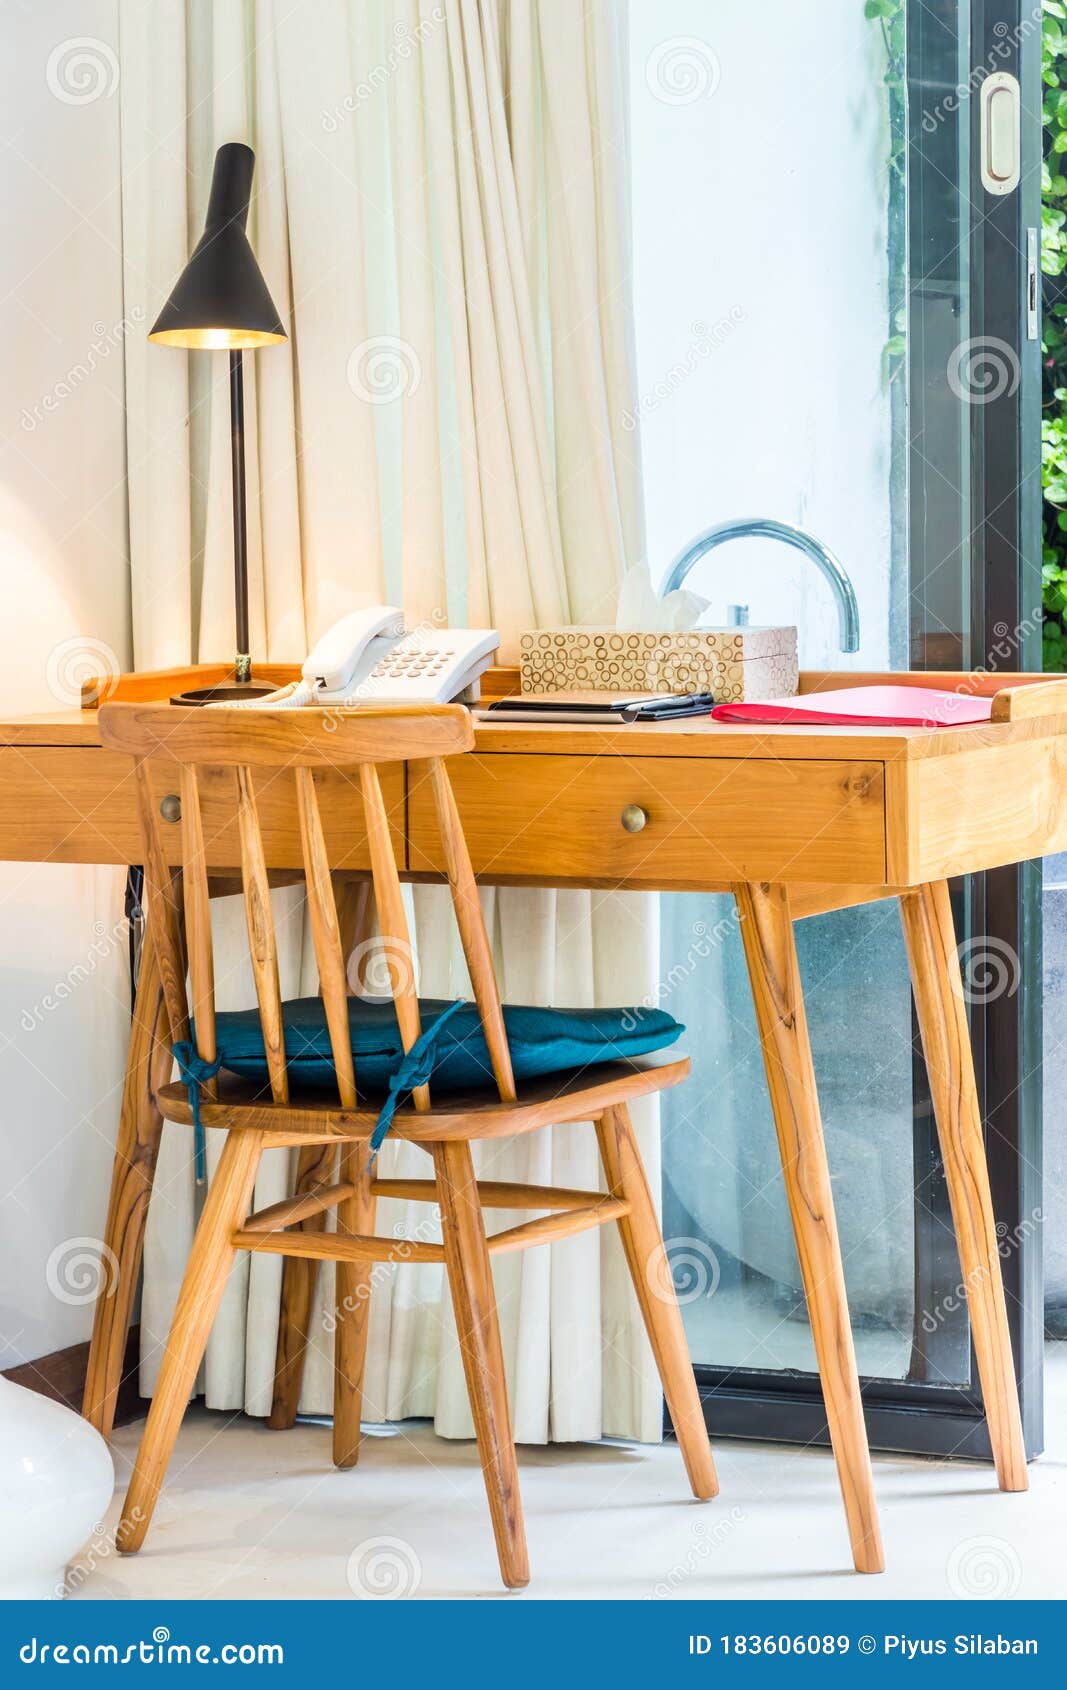 Wooden Dressing Table Unique Original Design Stock Image Image Of Indoor Book 183606089,Modern Small Kitchen Design 2020